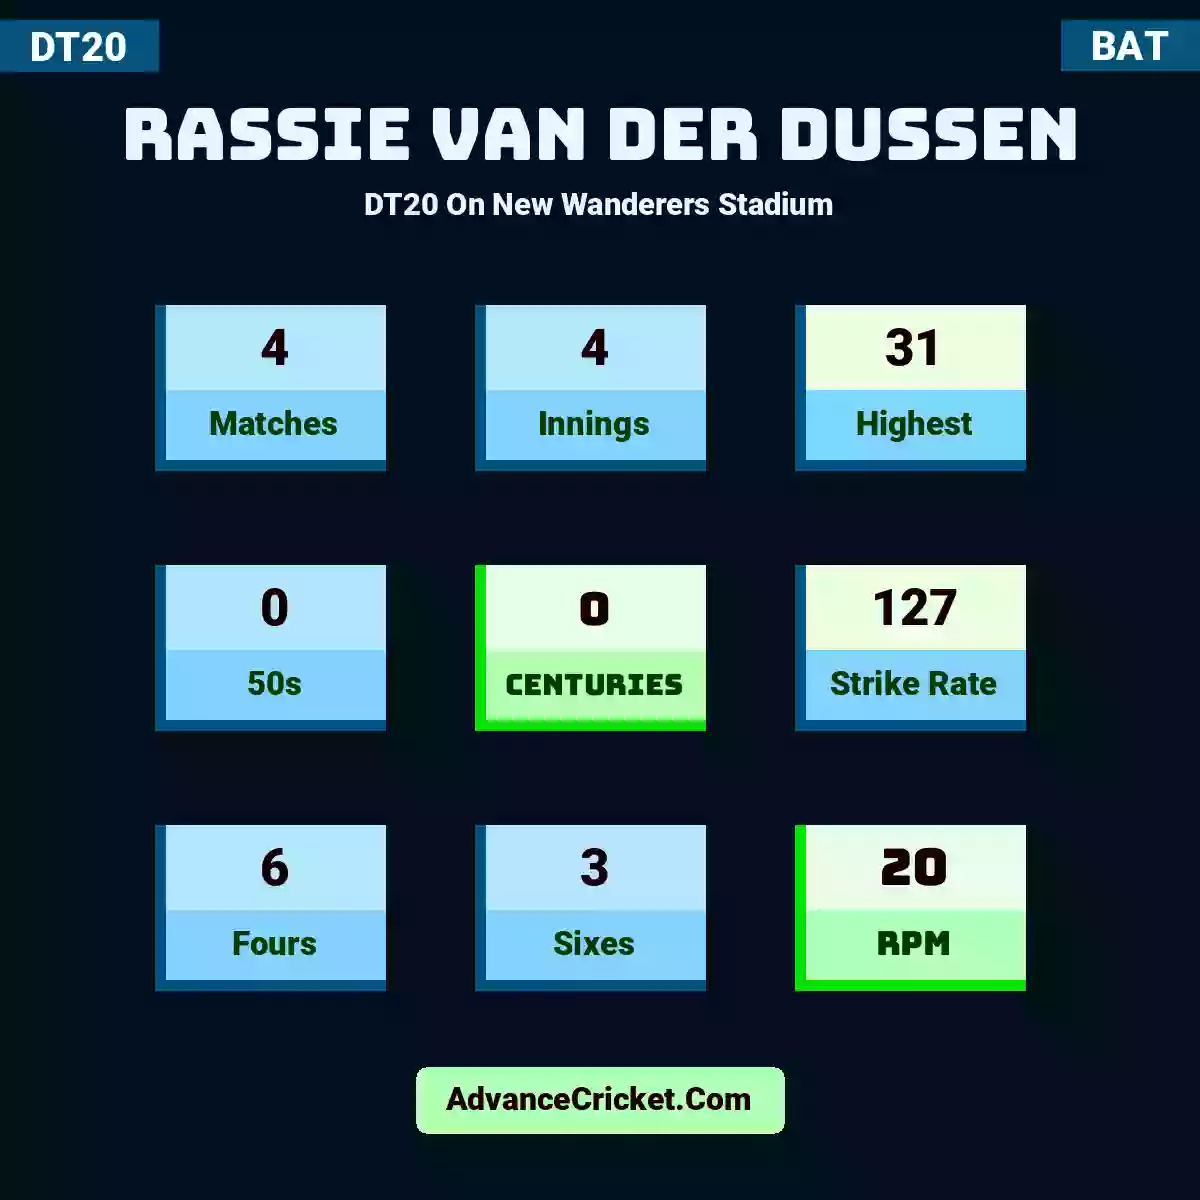 Rassie van der Dussen DT20  On New Wanderers Stadium, Rassie van der Dussen played 4 matches, scored 31 runs as highest, 0 half-centuries, and 0 centuries, with a strike rate of 127. R.Dussen hit 6 fours and 3 sixes, with an RPM of 20.